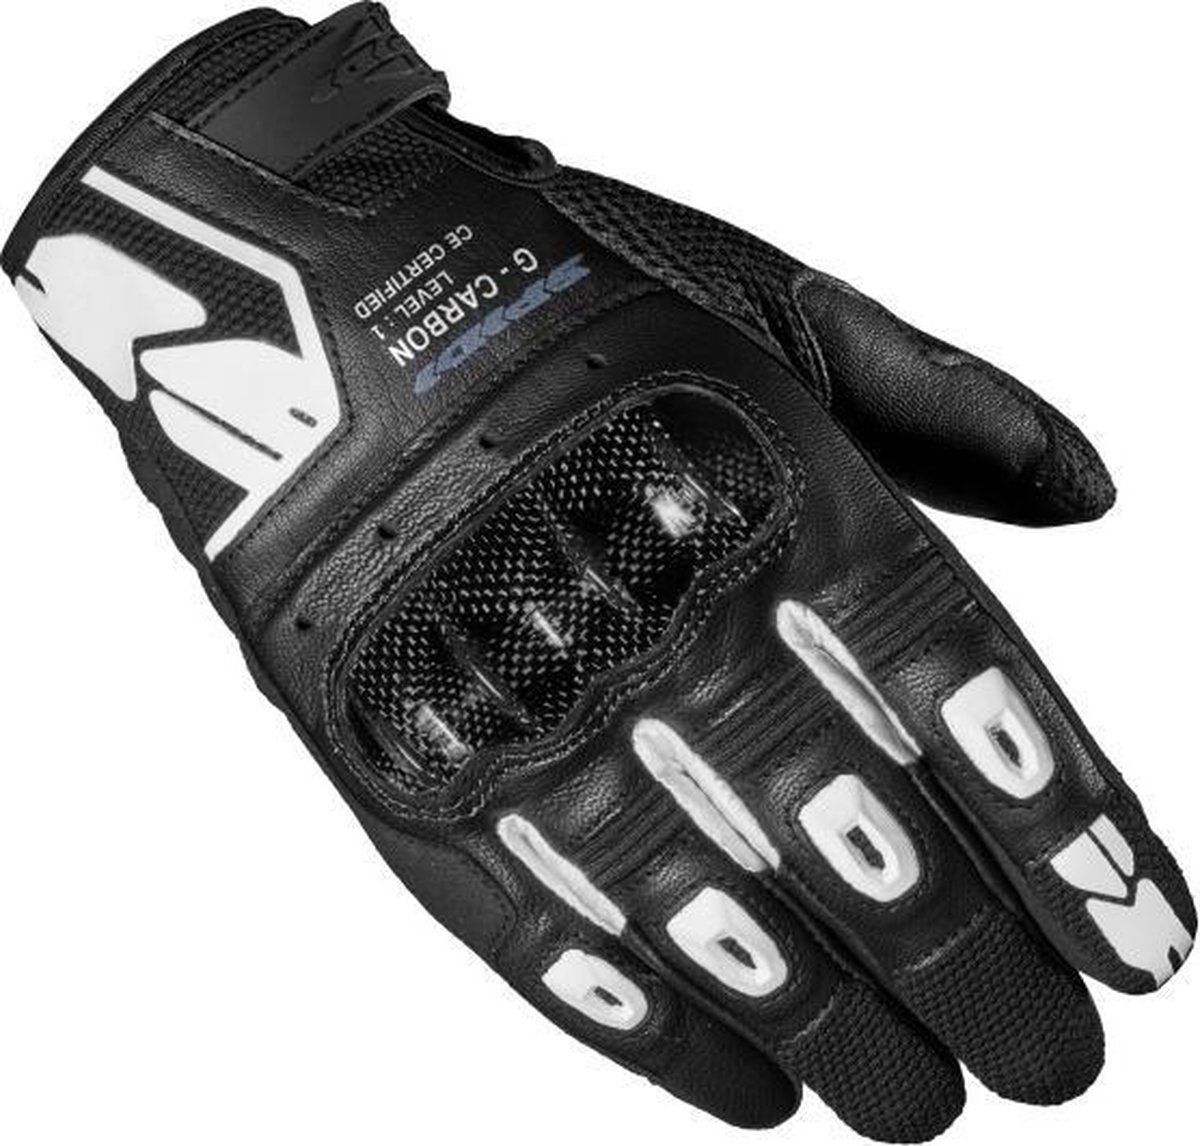 Spidi G-Carbon Black White Motorcycle Gloves L